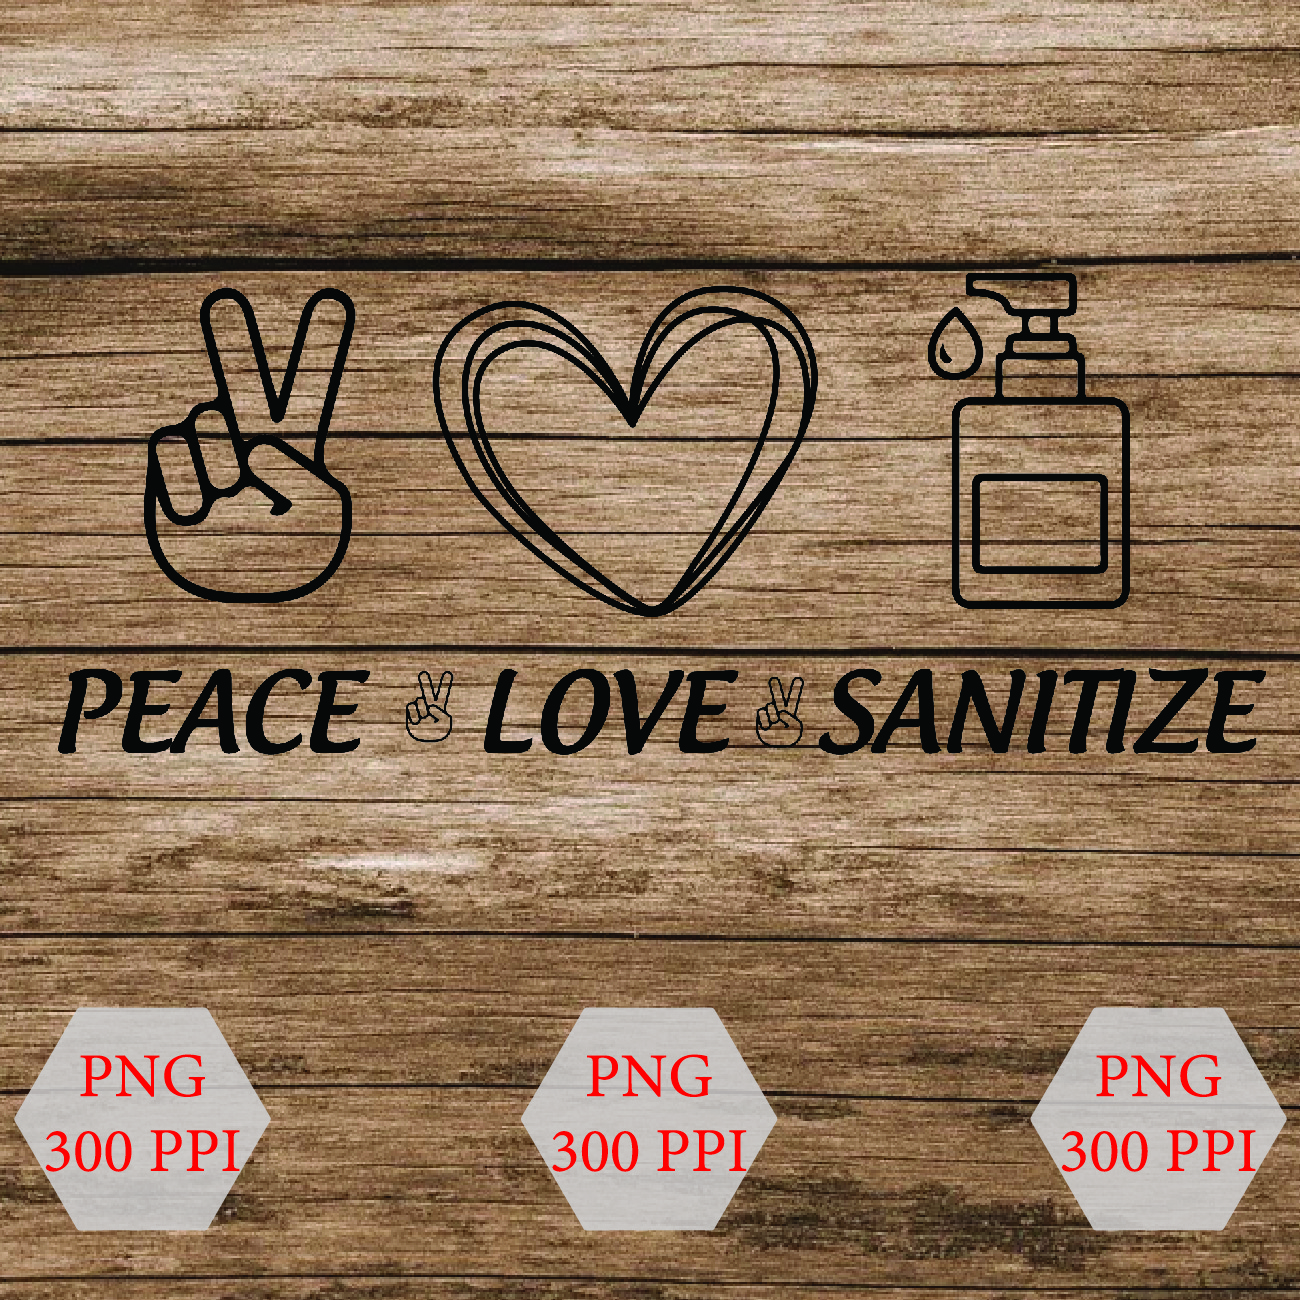 Peace love sanitize svg, social distancing svg, coronavirus quarantine svg, svg, cut file, line design, dxf, clipart, vector, icon, eps, pdf